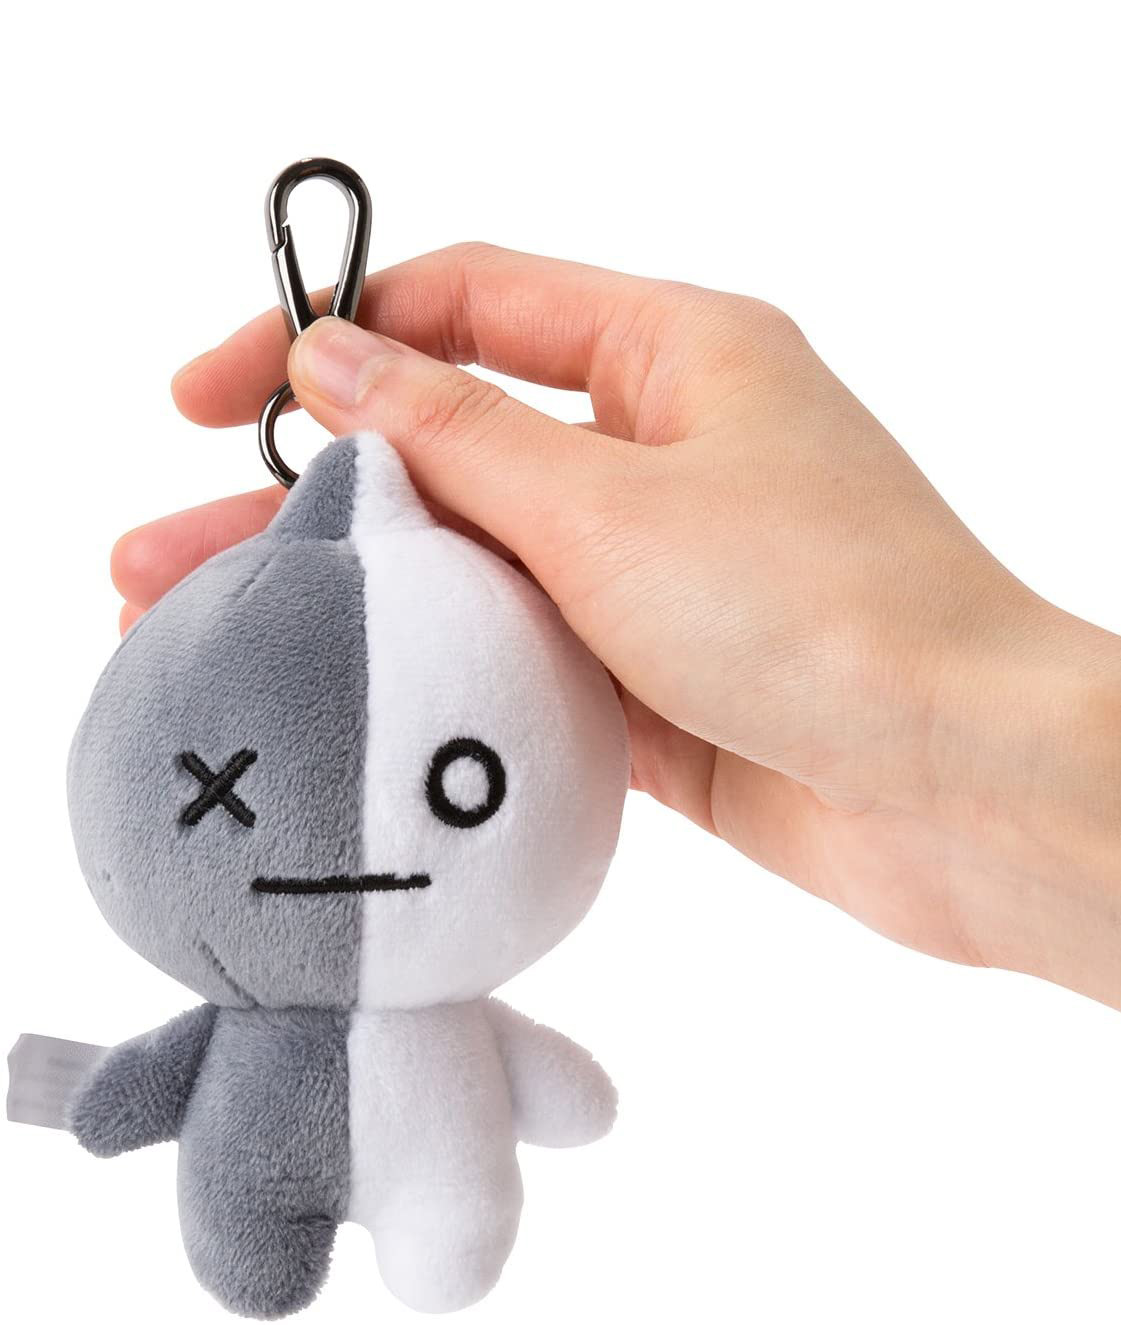 BT21 BTS Bangtan 4INCH Stuffed Plush Toy for Boys with Keychain